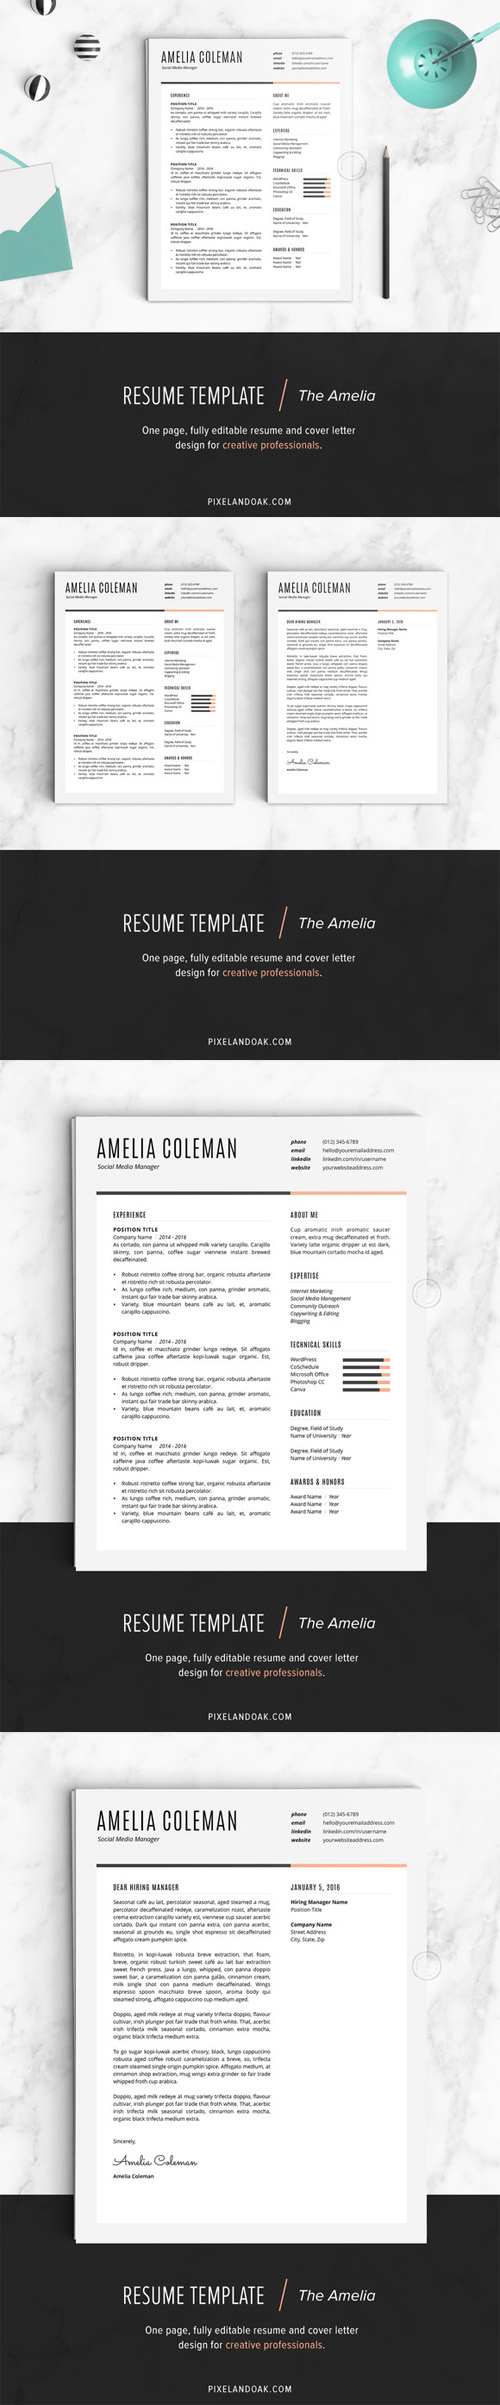 CM - Resume Template | The Amelia 482115